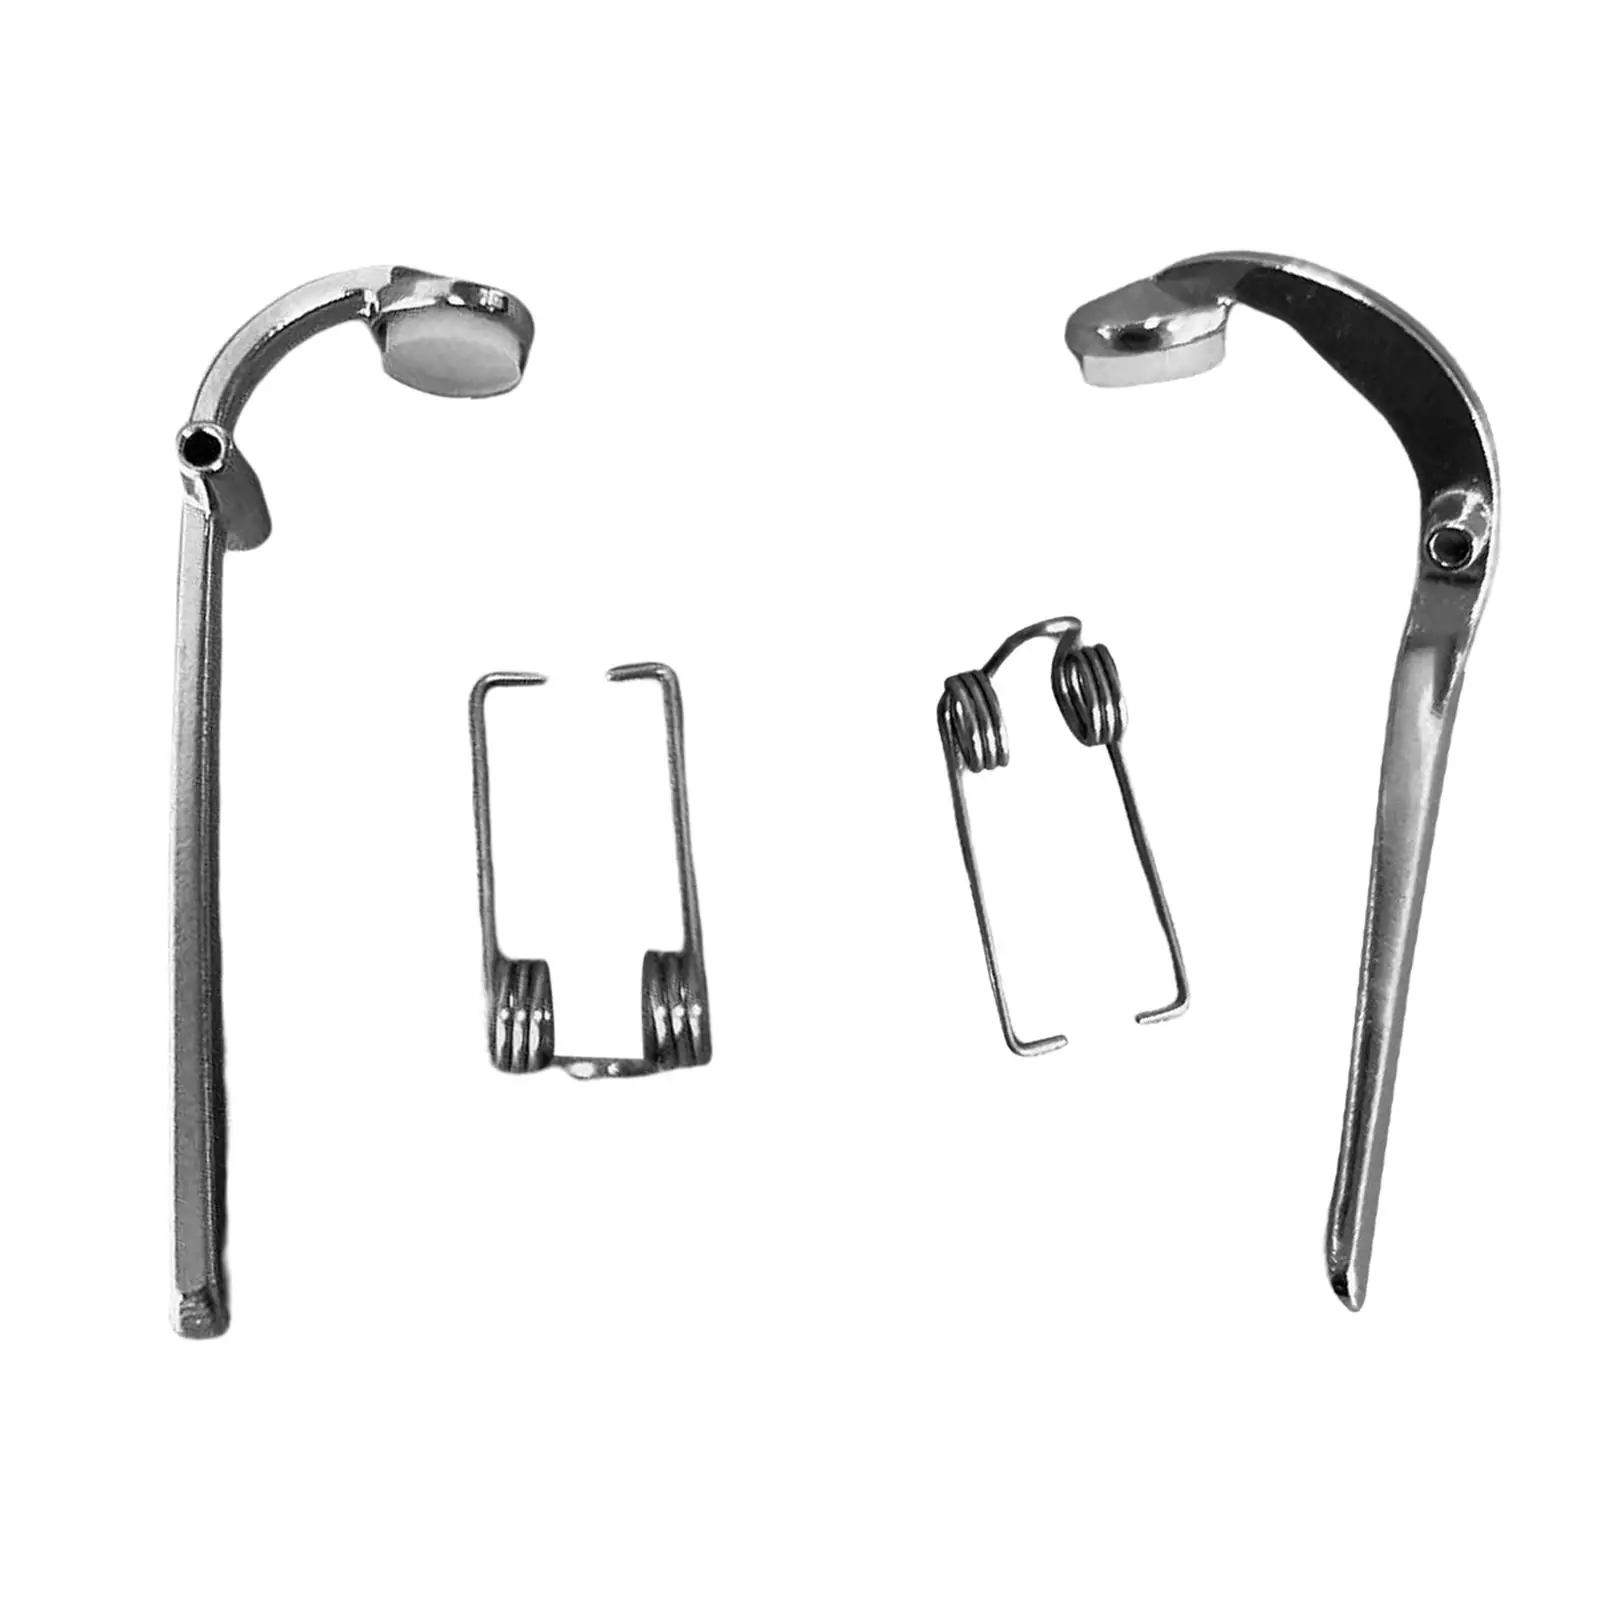 Trumpet Key Spit Valve Maintenance Kit Instrument Accessory Trumpet Valves Springs for Trombone